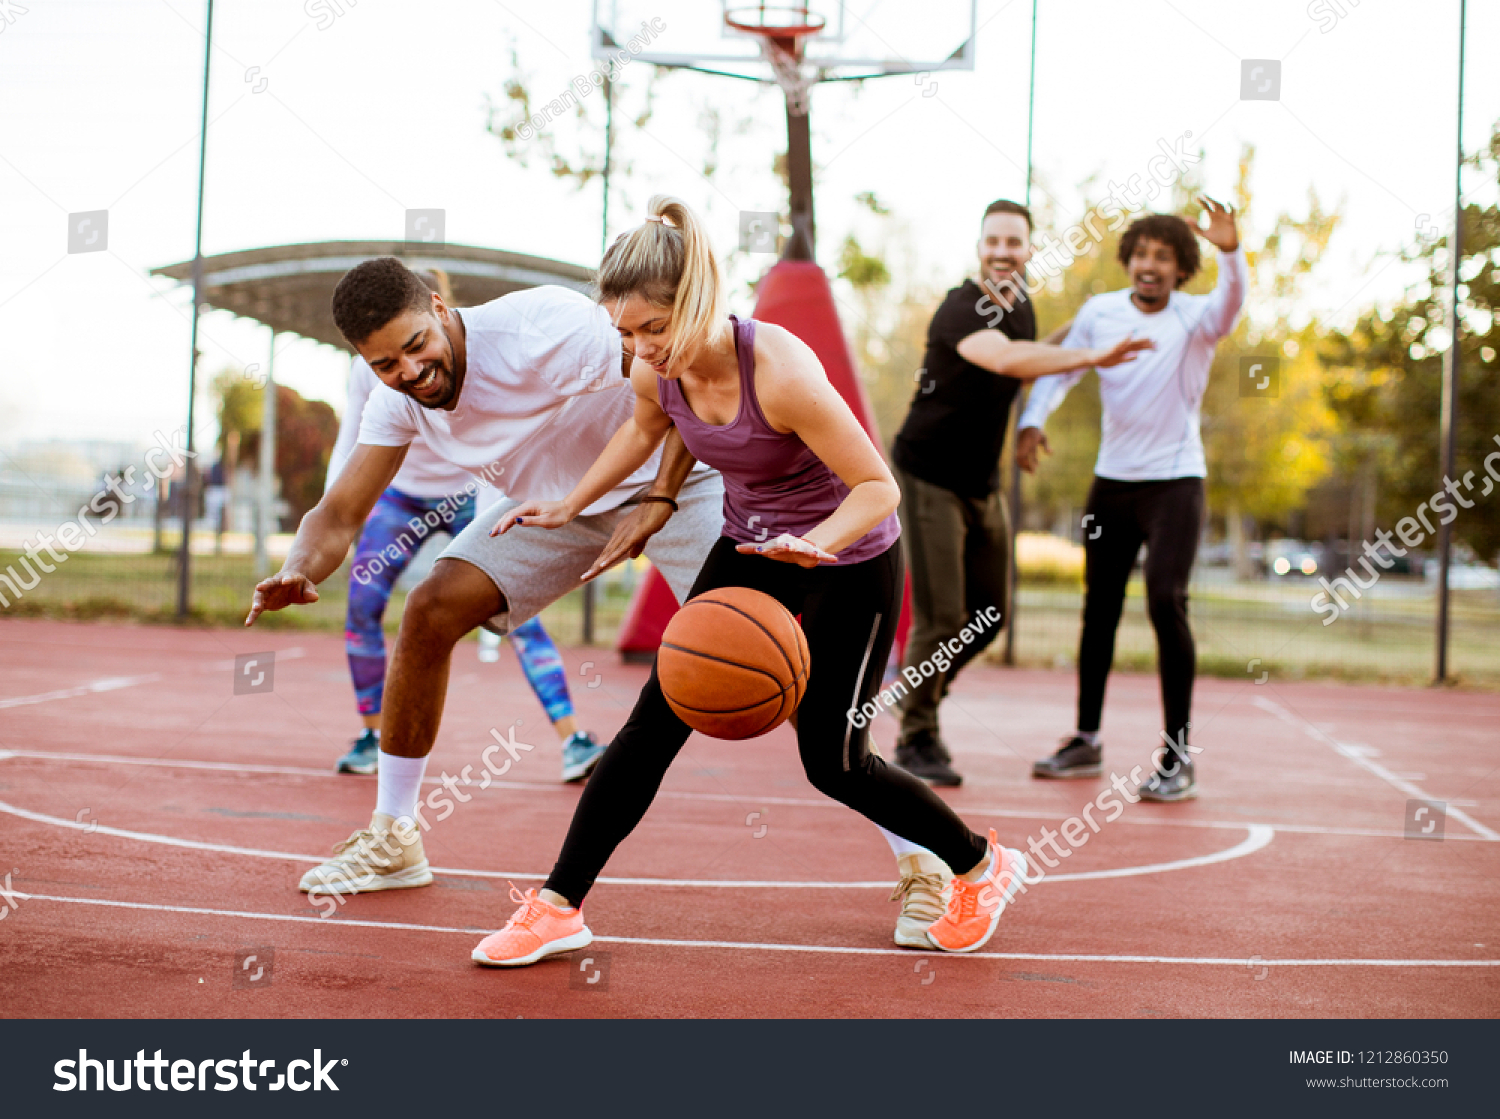 playing basket ball